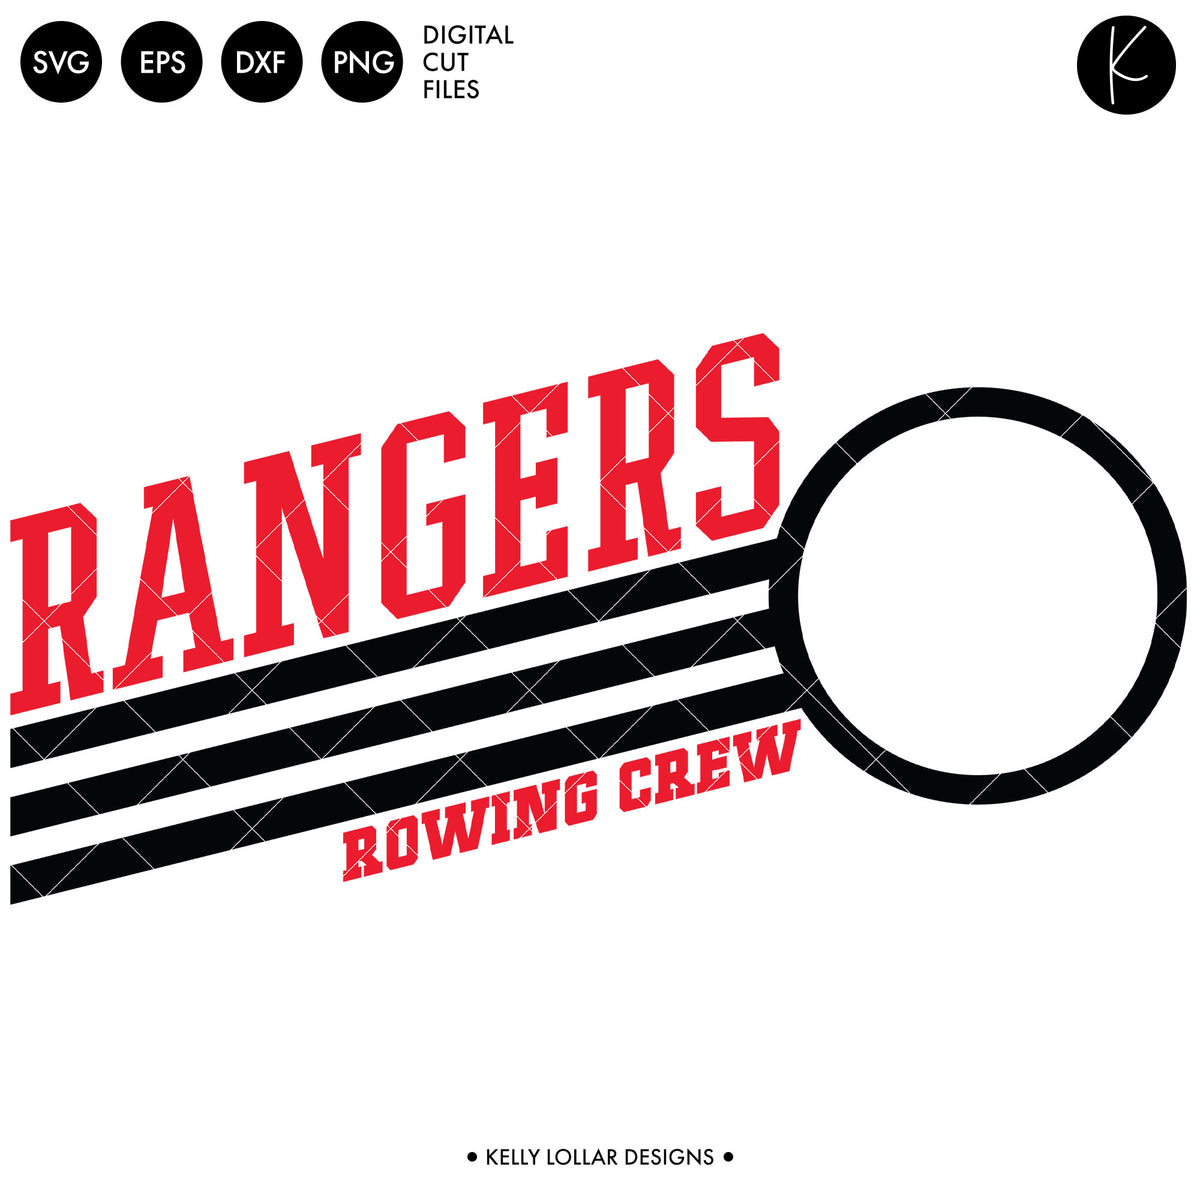 Rangers Rowing Crew Bundle | SVG DXF EPS PNG Cut Files